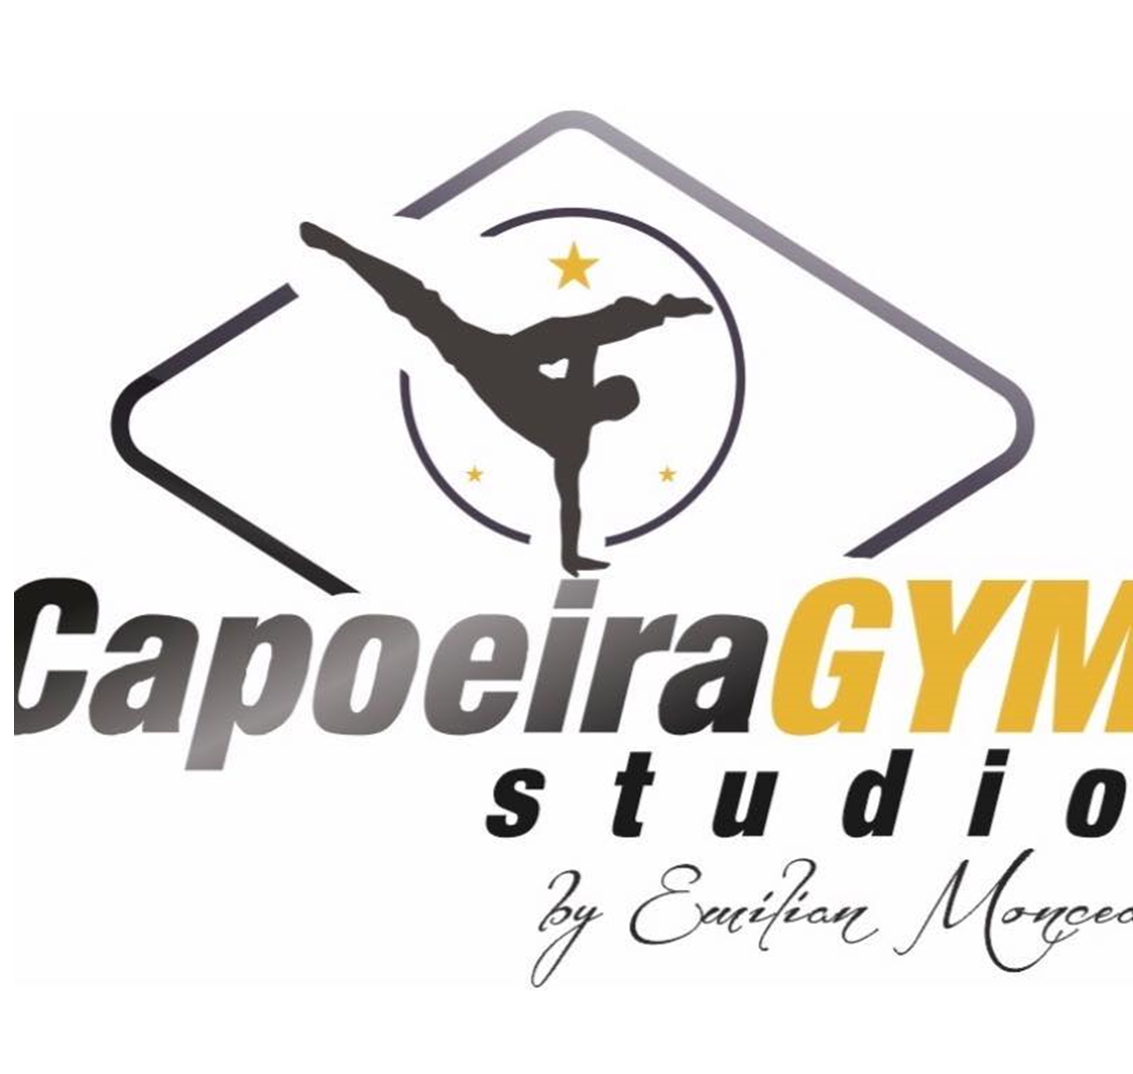 capoiera gym studio sponsor